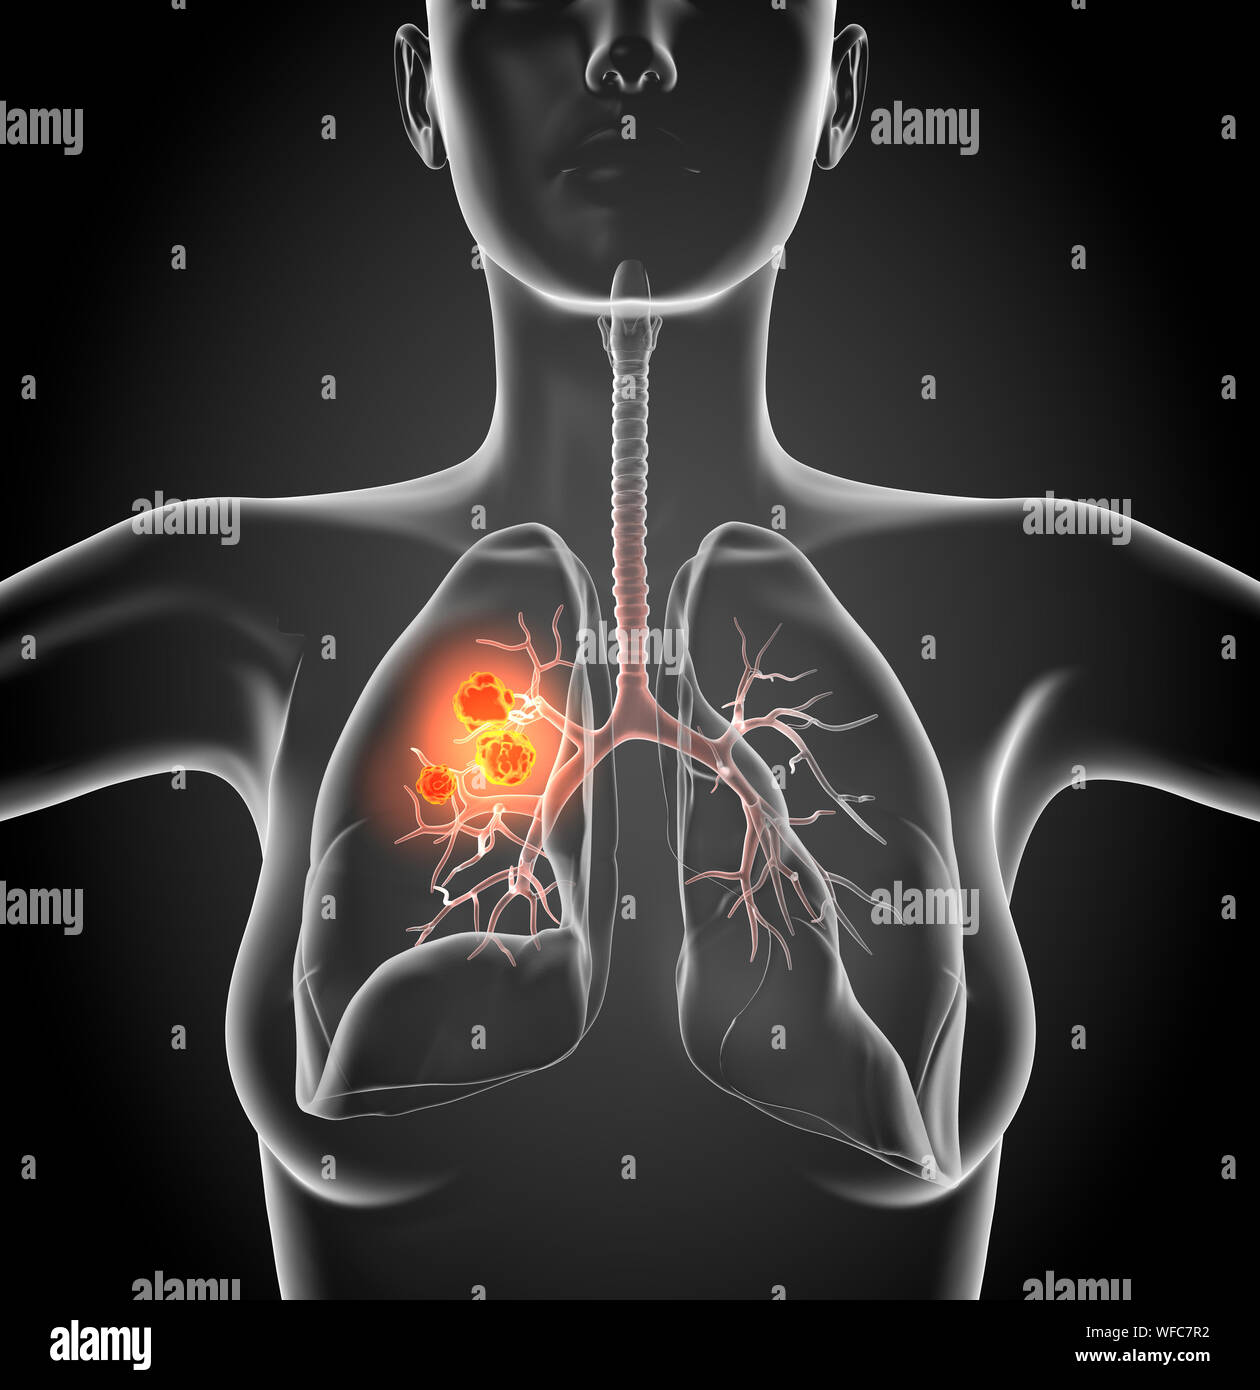 Medical Illustration showing lung cancer or bronchial carcinoma on black background, 3D illustration Stock Photo